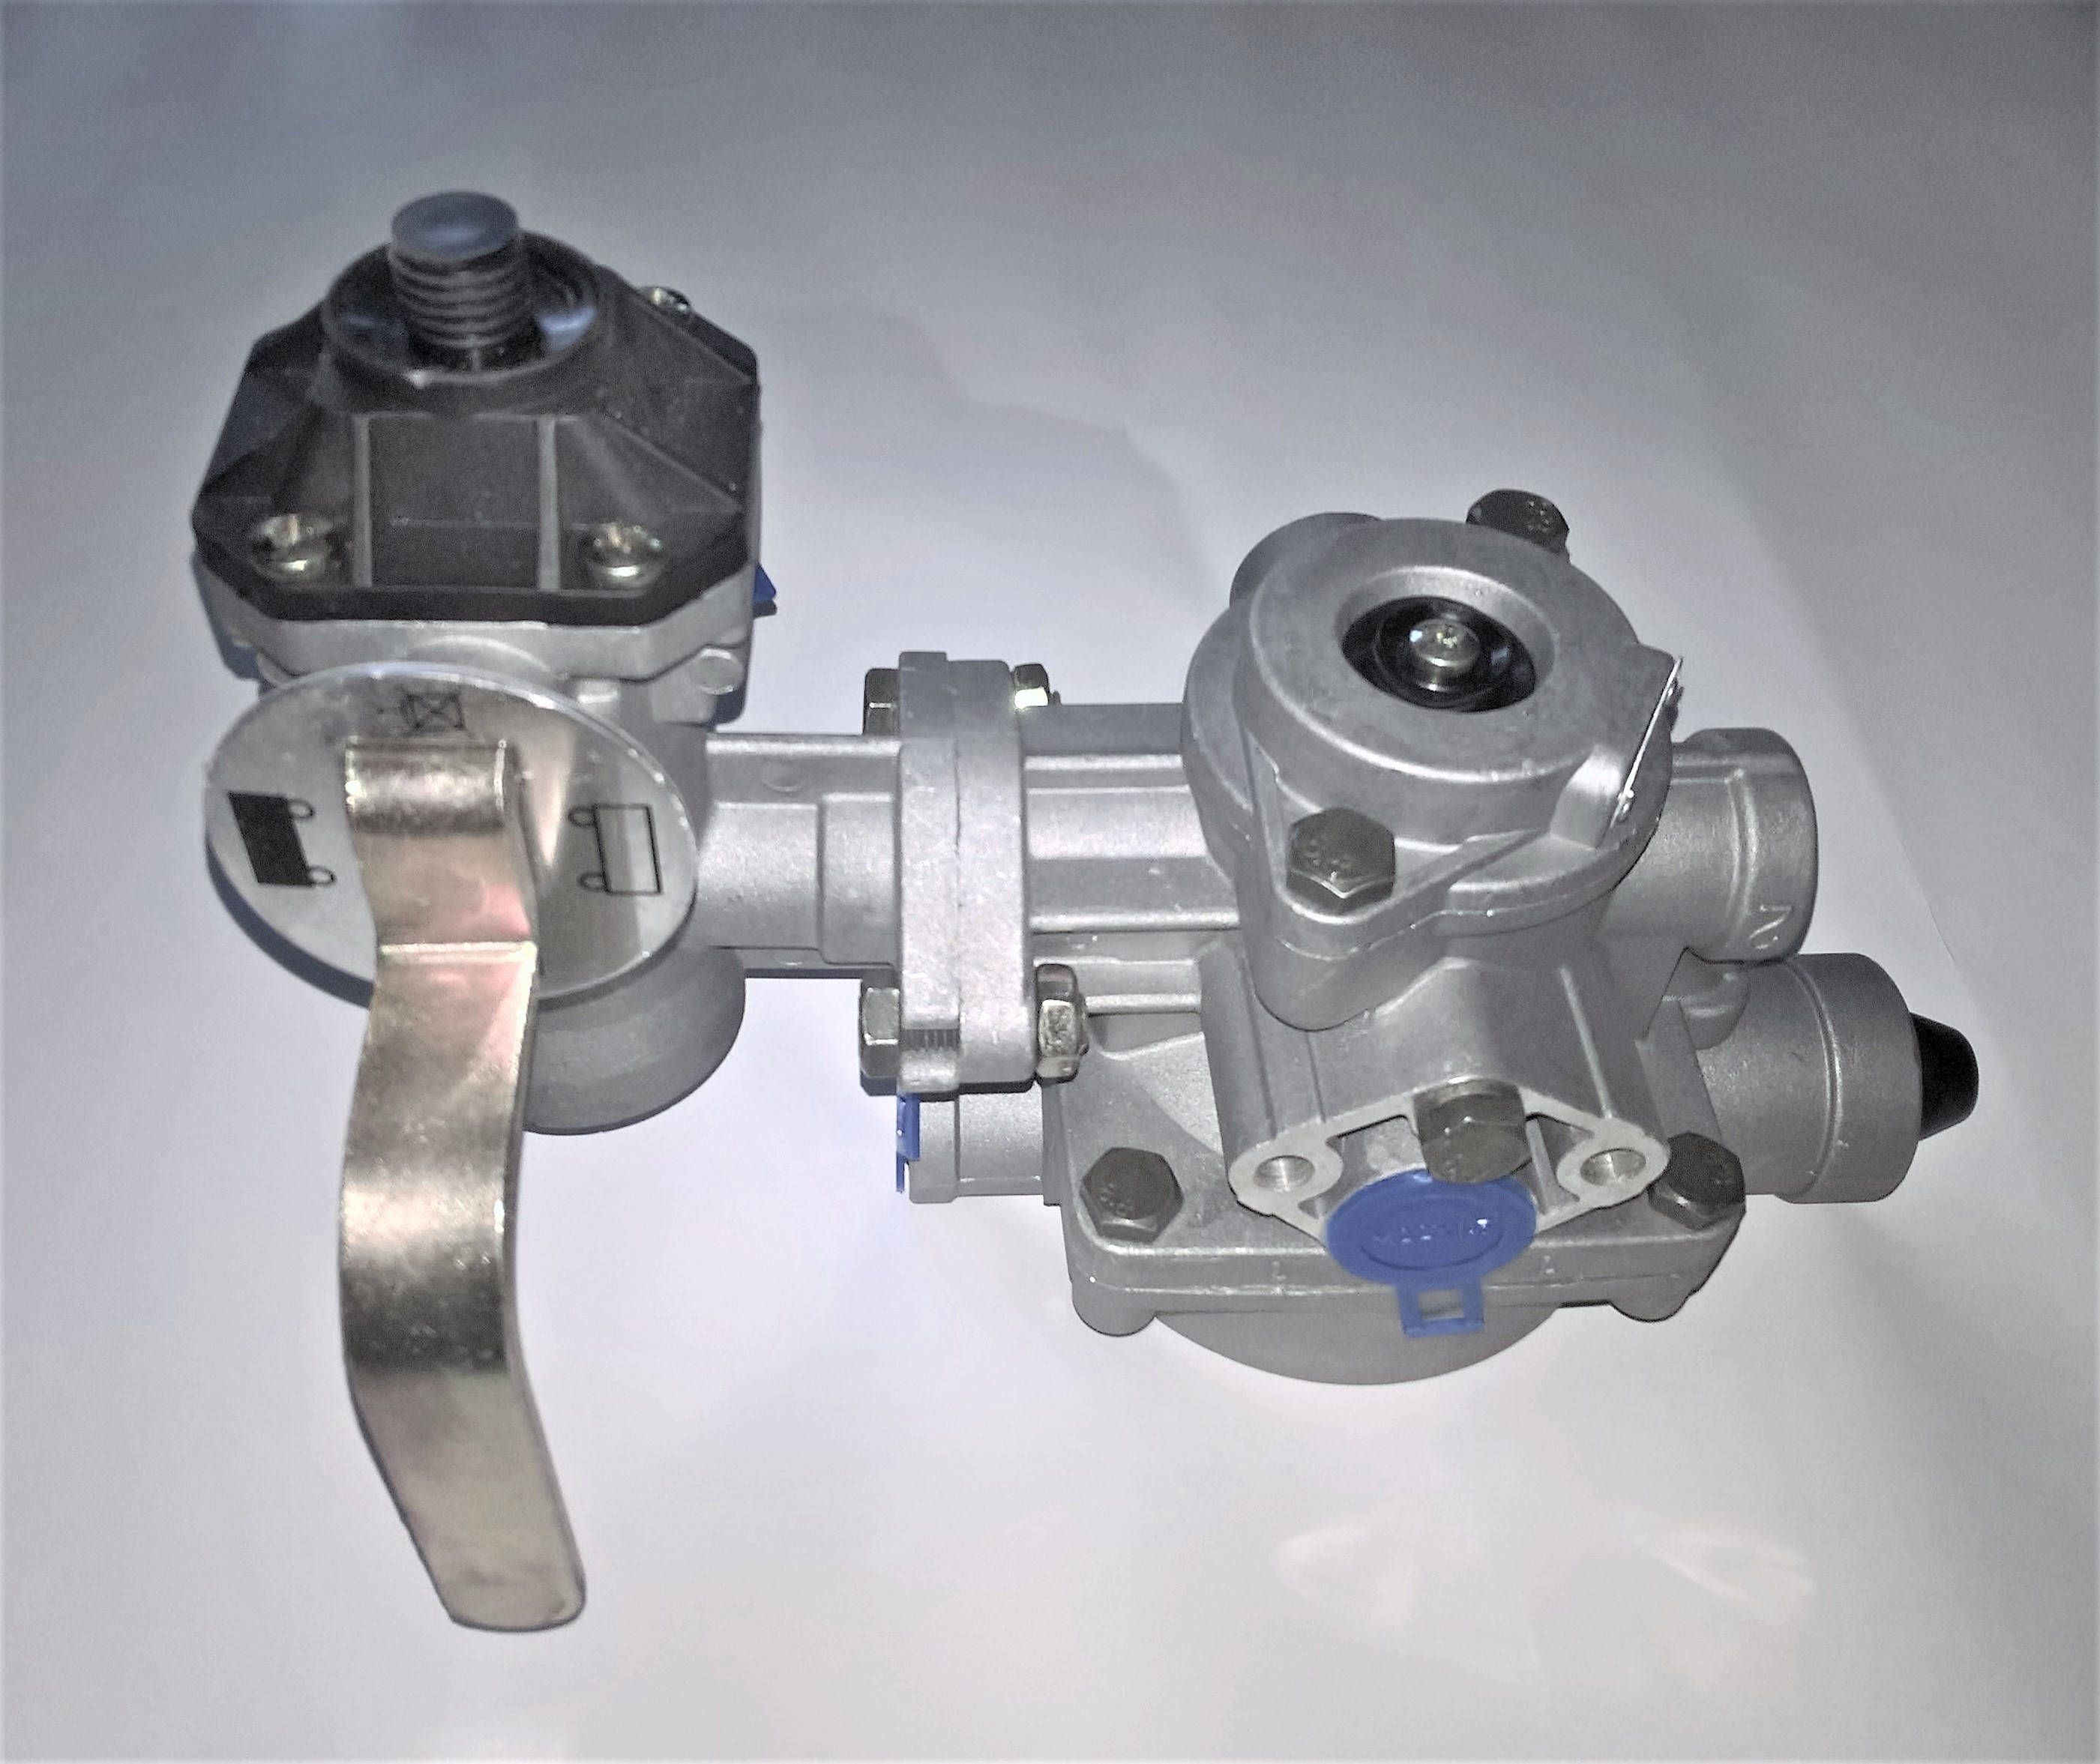 NFZ LKW Ersatzteile Shop - Trailer brake valve suitable for 